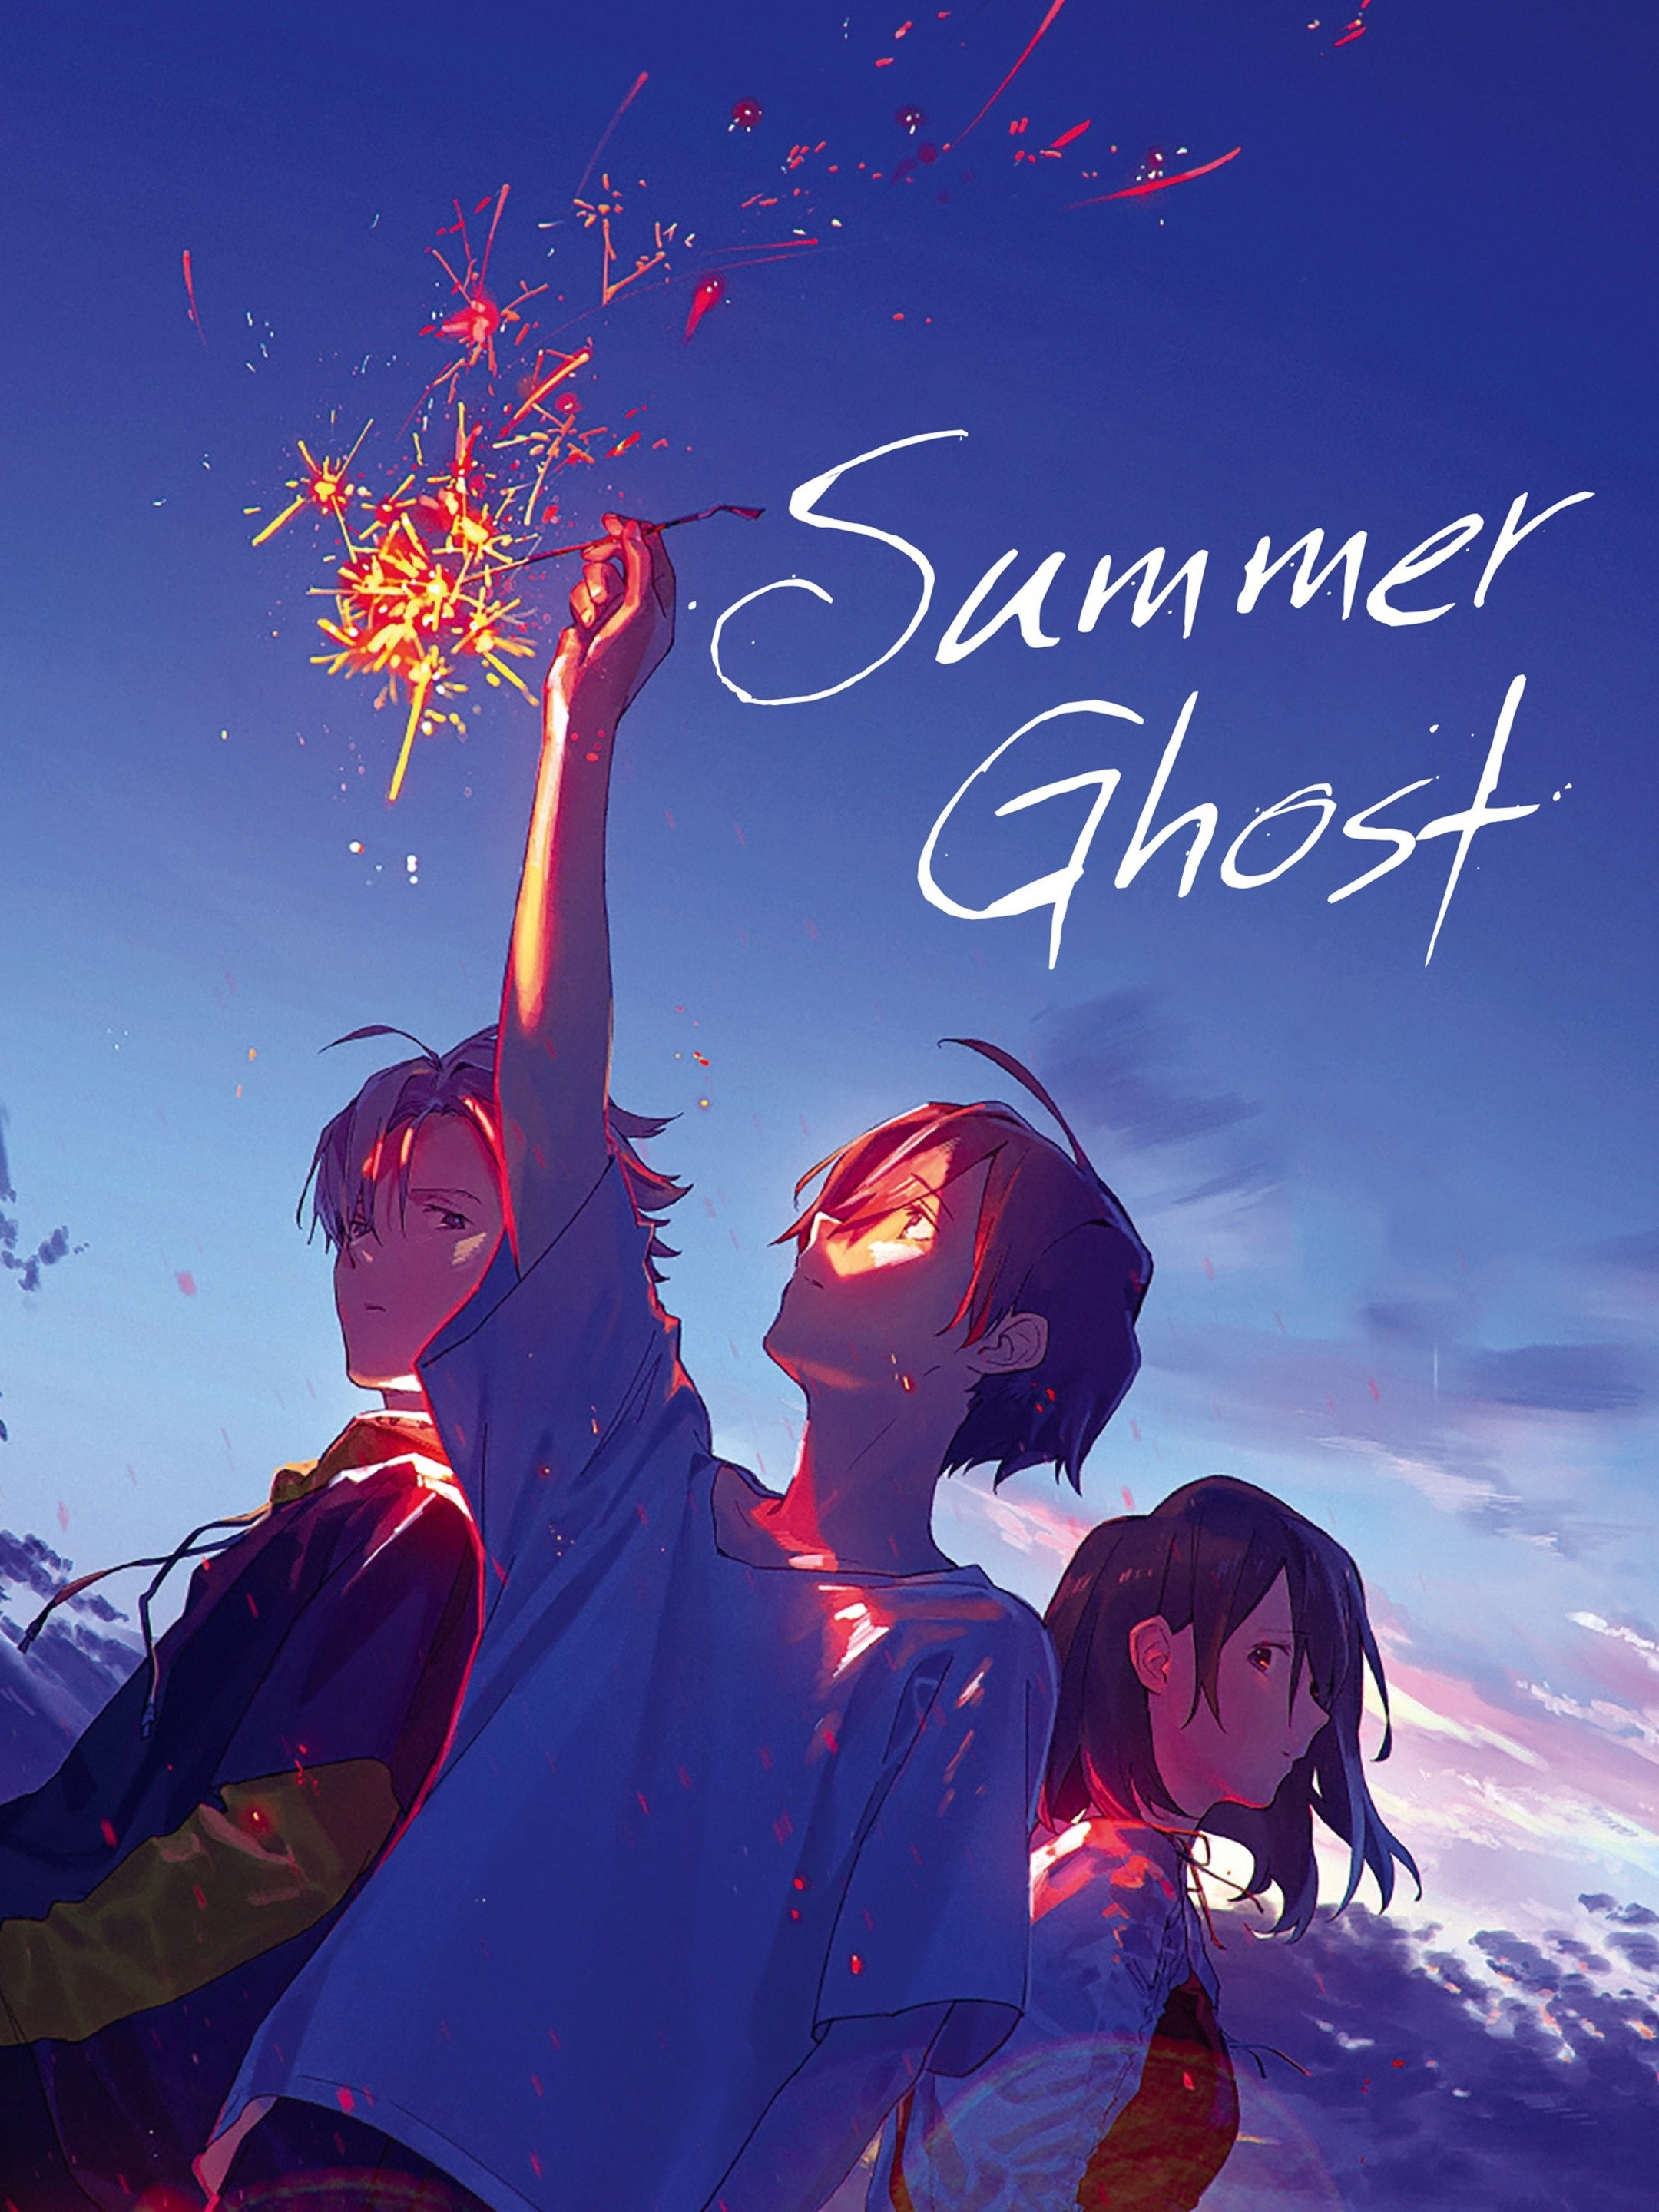 Original TV Anime '91 Days' Announced for Summer 2016